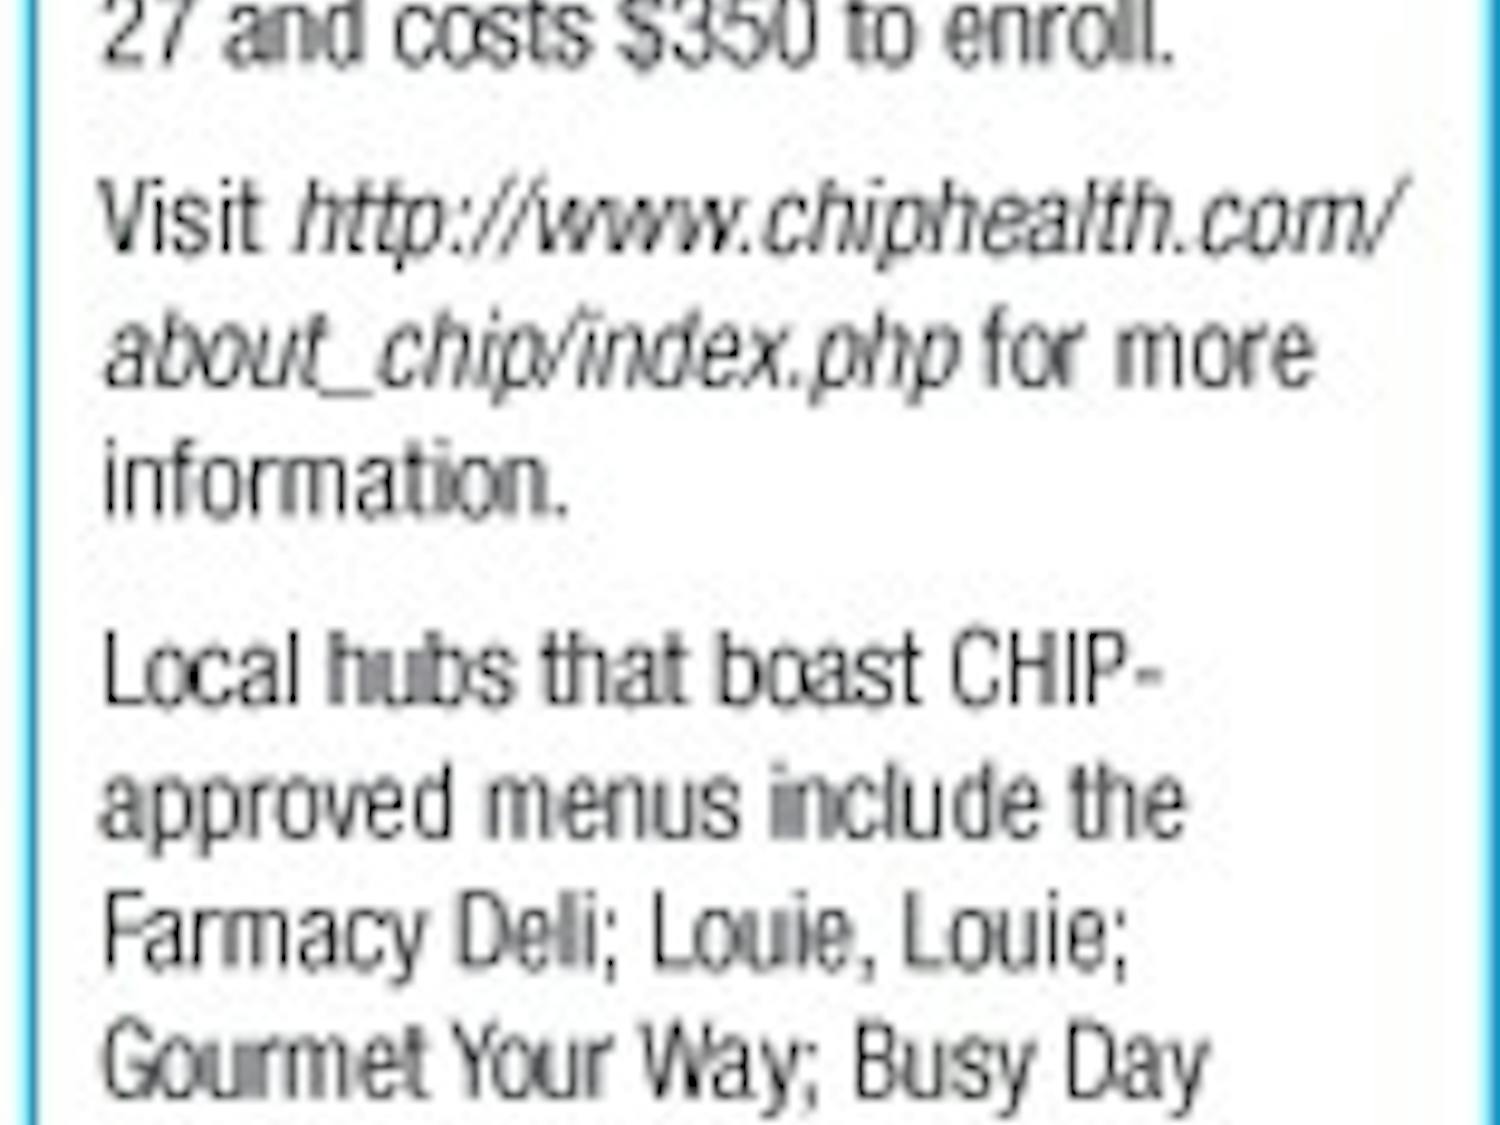 Local hubs that boast CHIP-approved menus include Kaiser's; Casa; Louie, Louie; Farmacy  